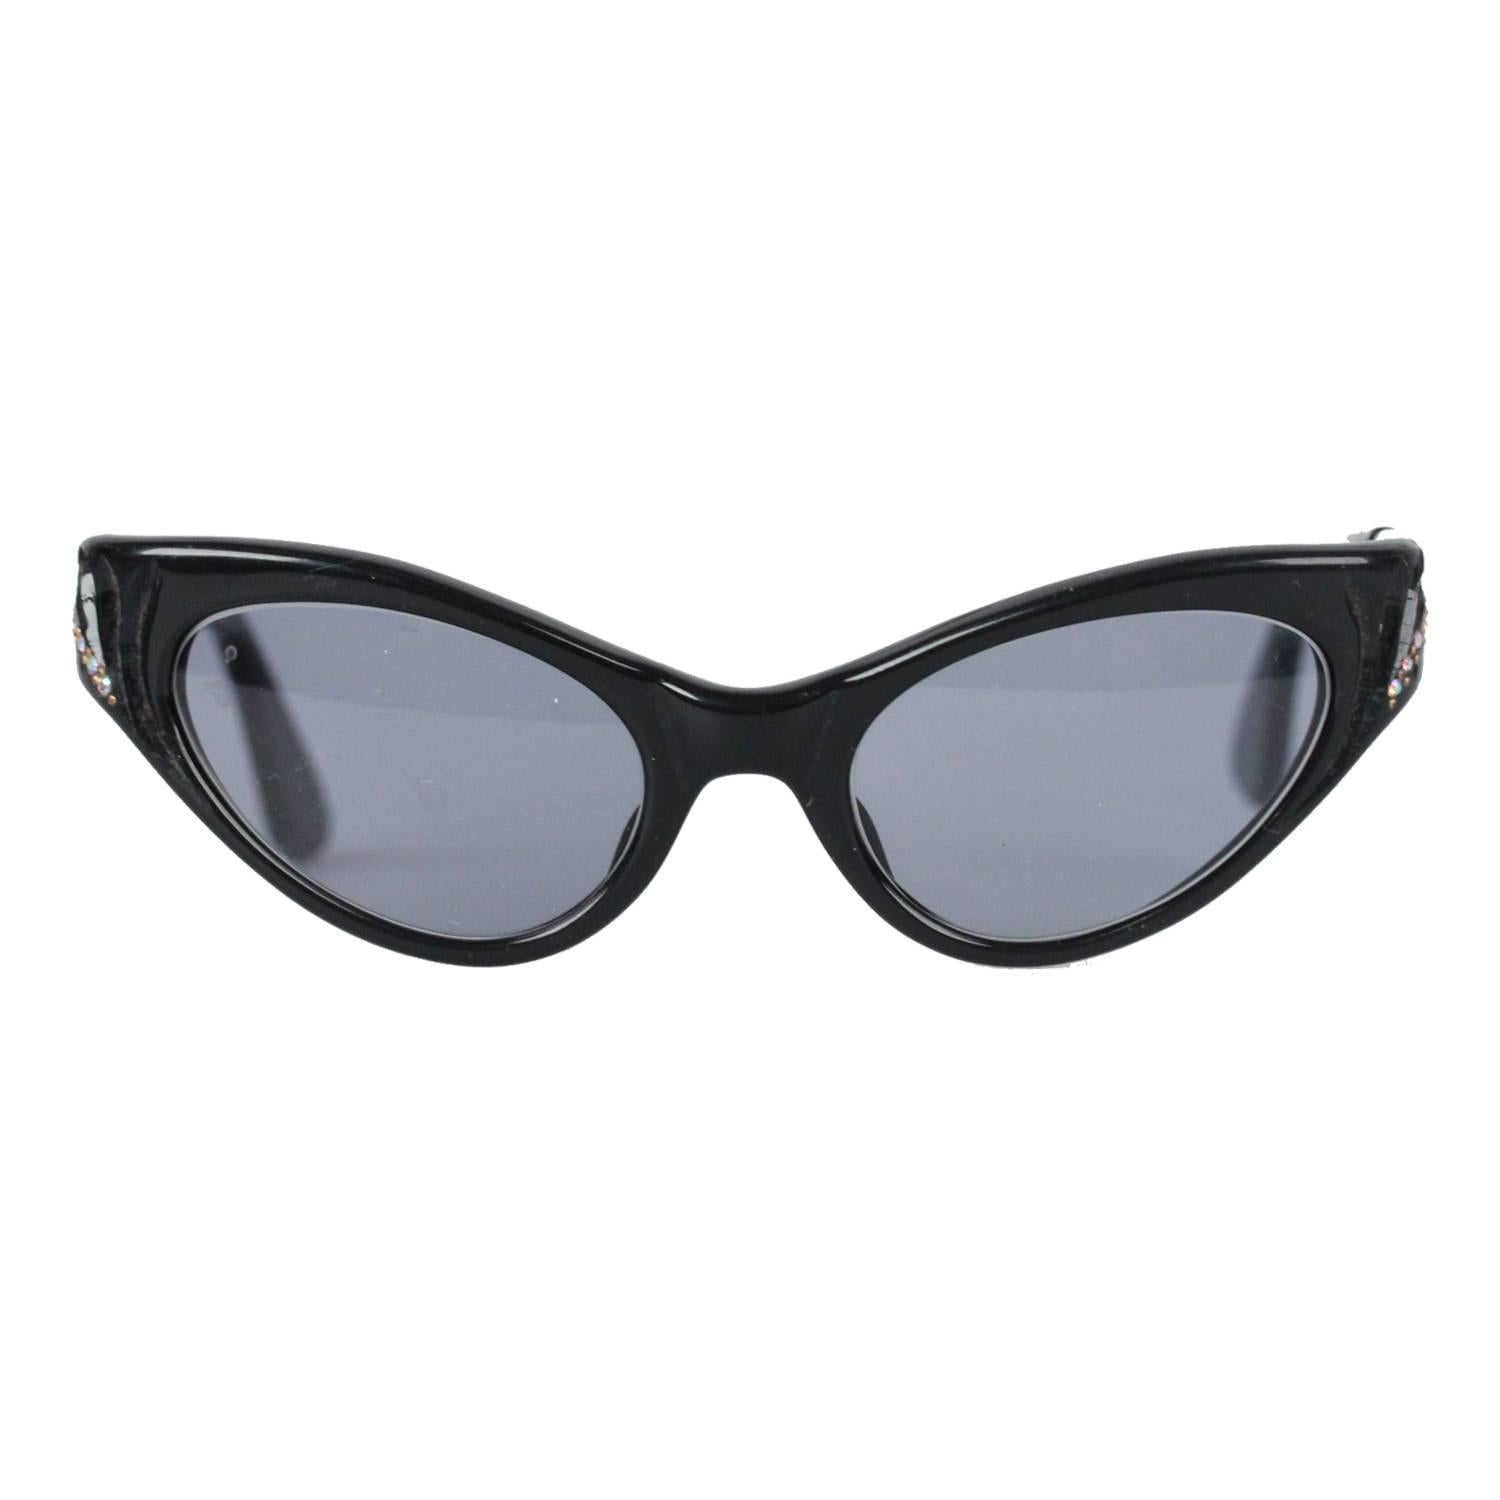 Vintage 1950s Cat-Eye Swank Sunglasses 4715 46/20 with Rhinestones